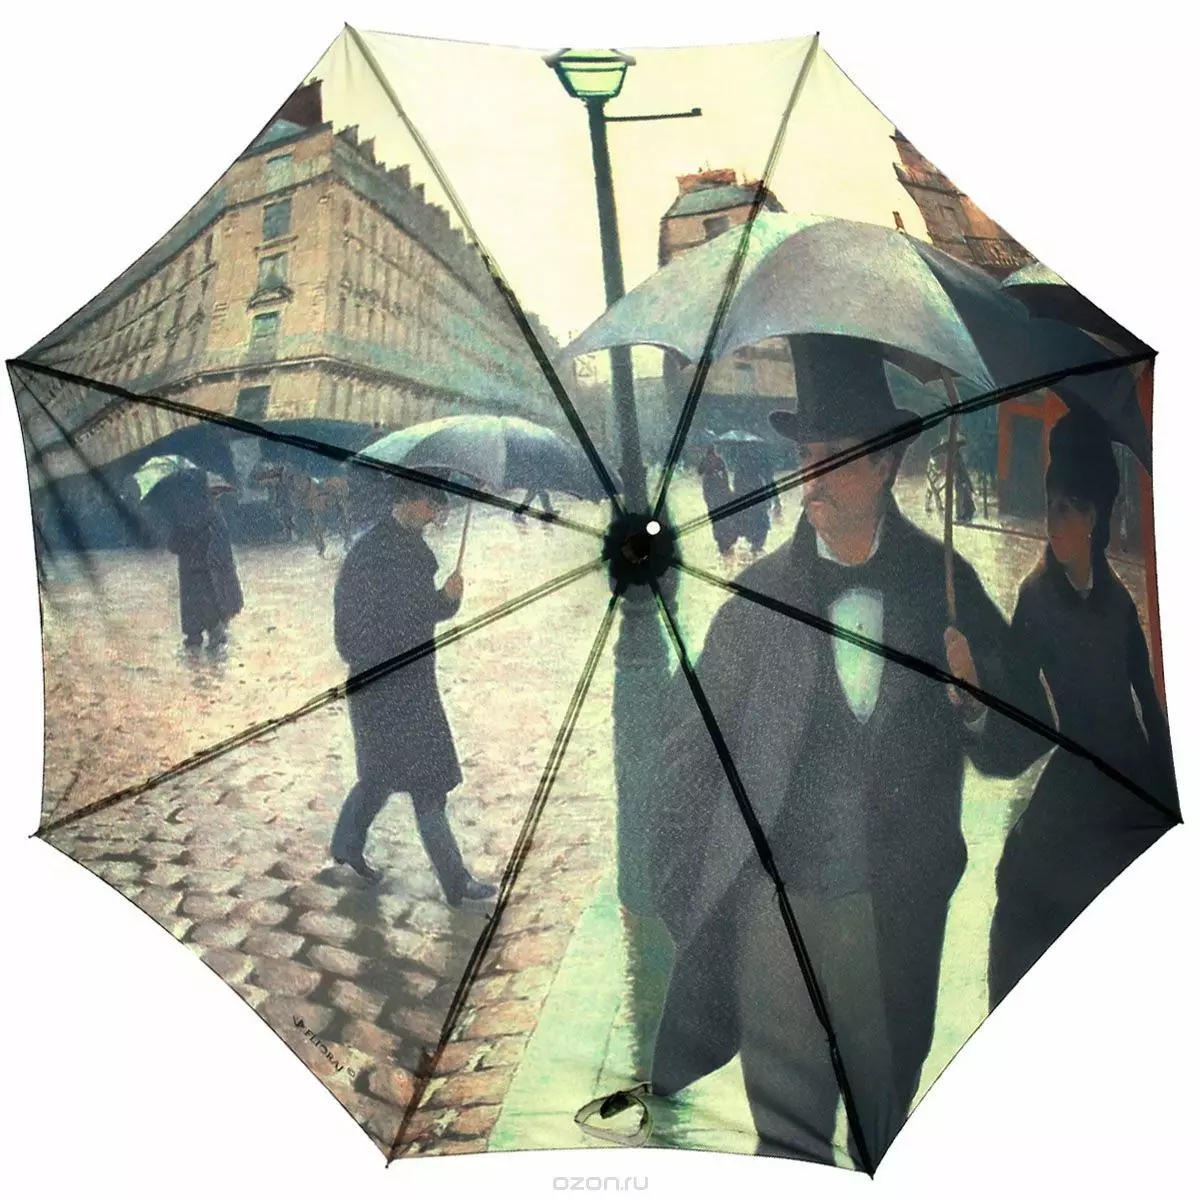 Kvinnlig paraply-cane (65 foton): Modeller med trähandtag 15220_46